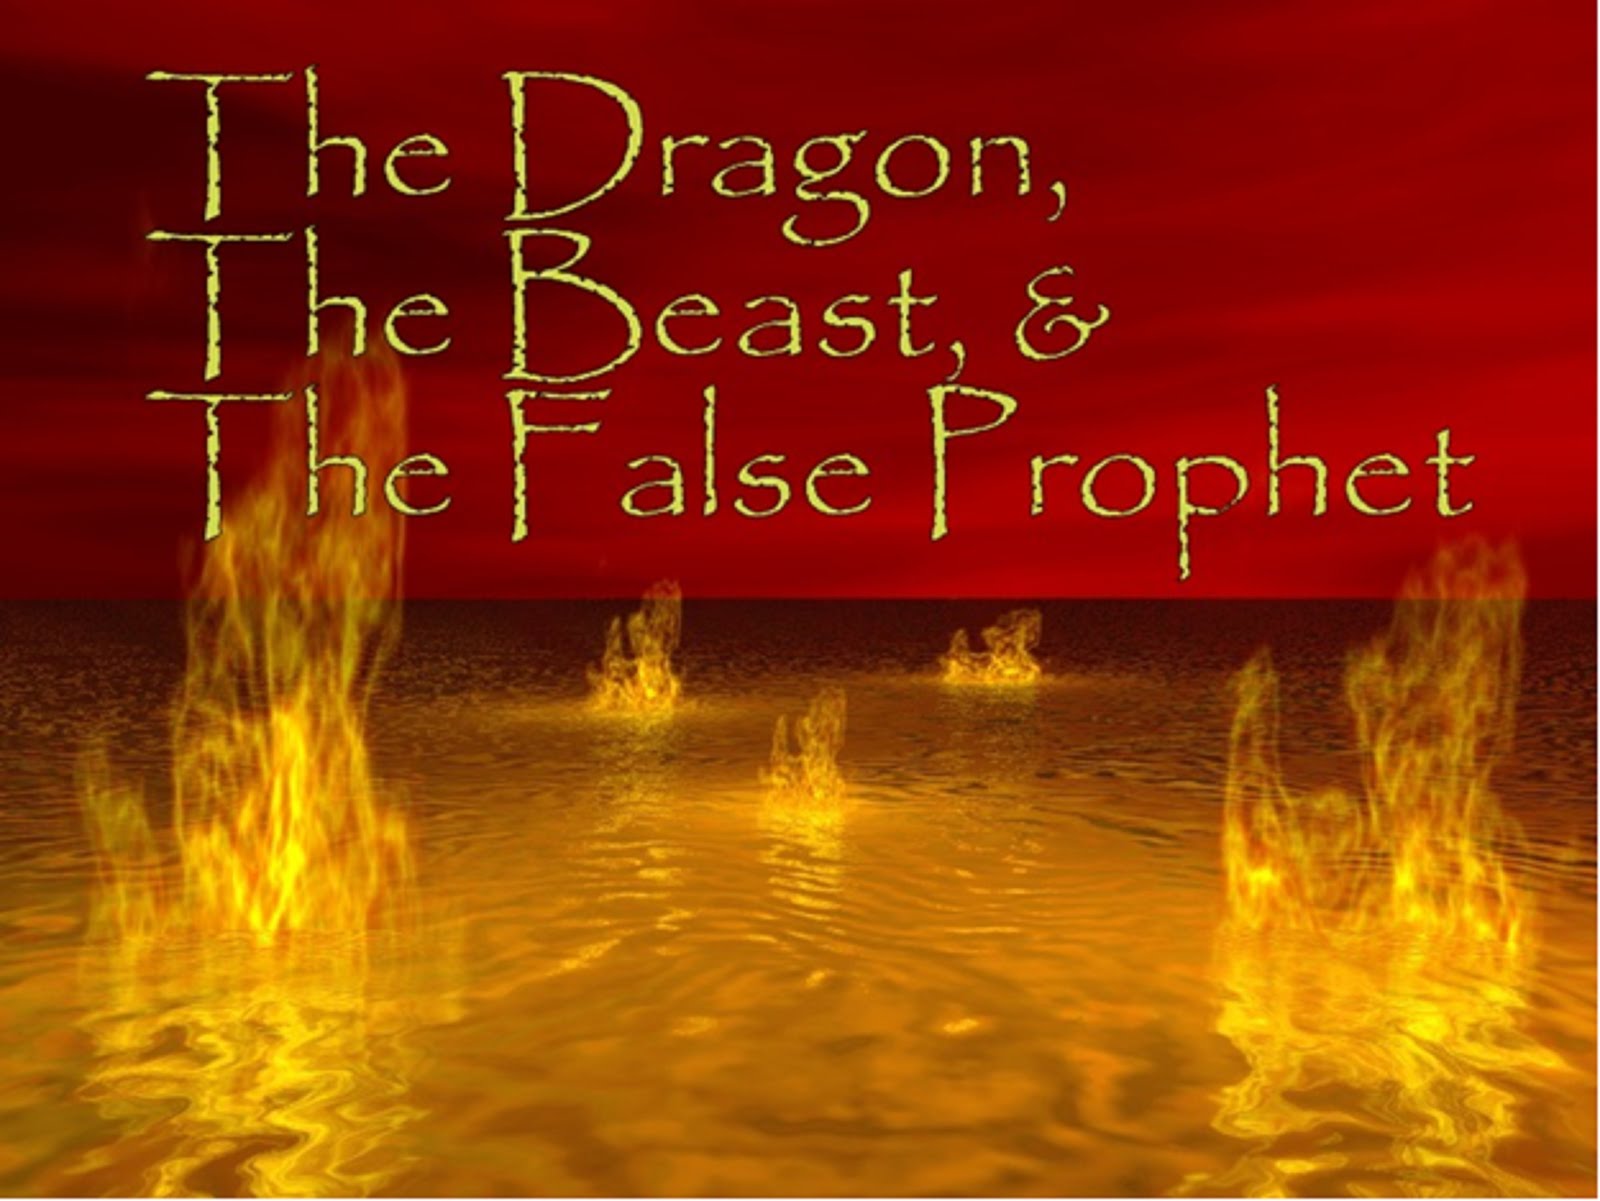 THE DRAGON, THE BEAST, THE FALSE PROPHET